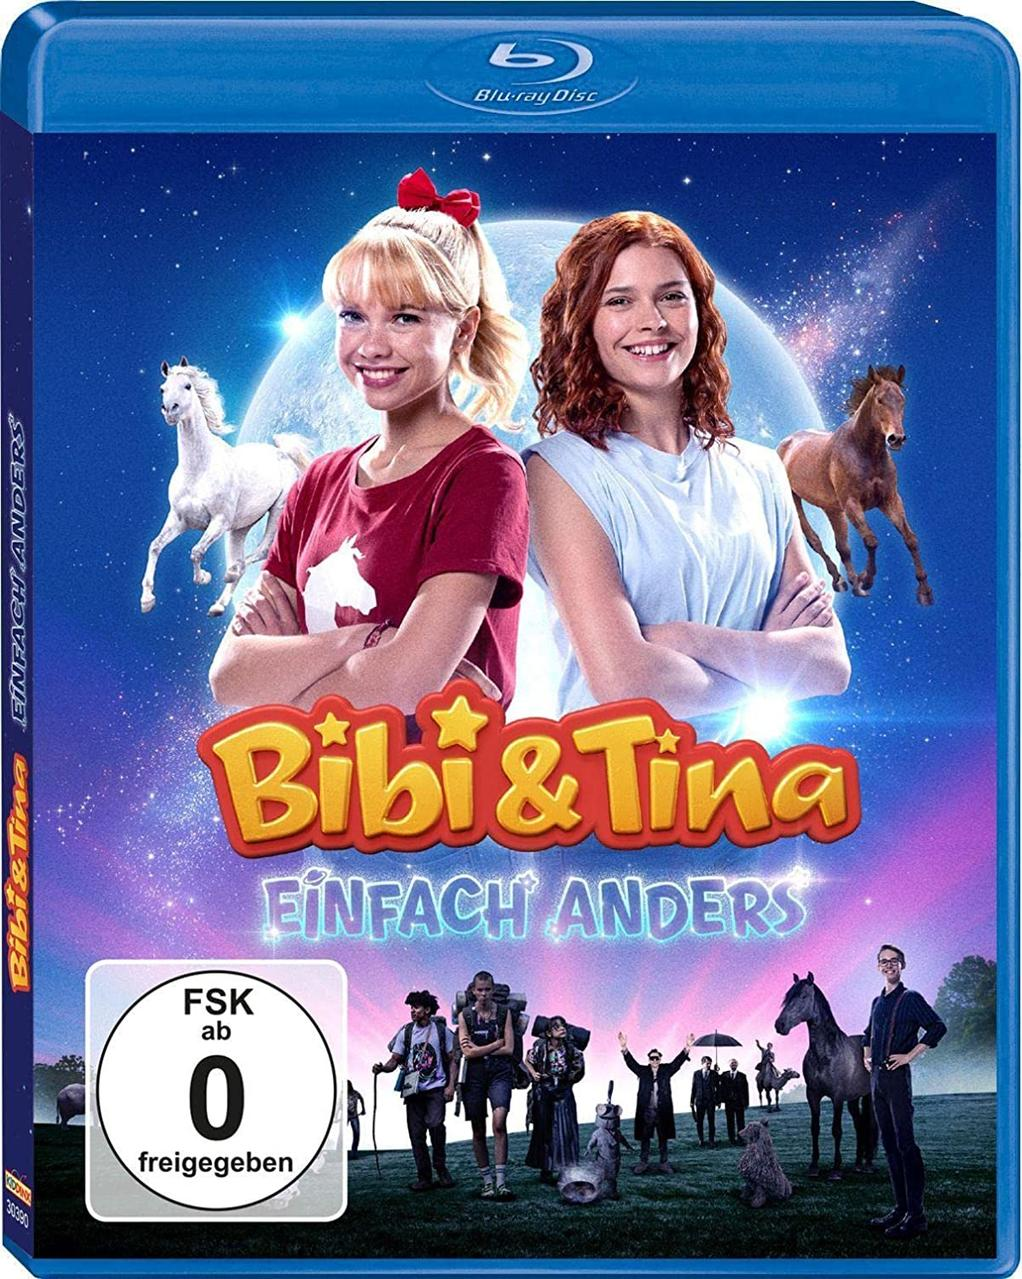 anders Tina Bibi & Einfach 5.Kinofilm Blu-ray - -